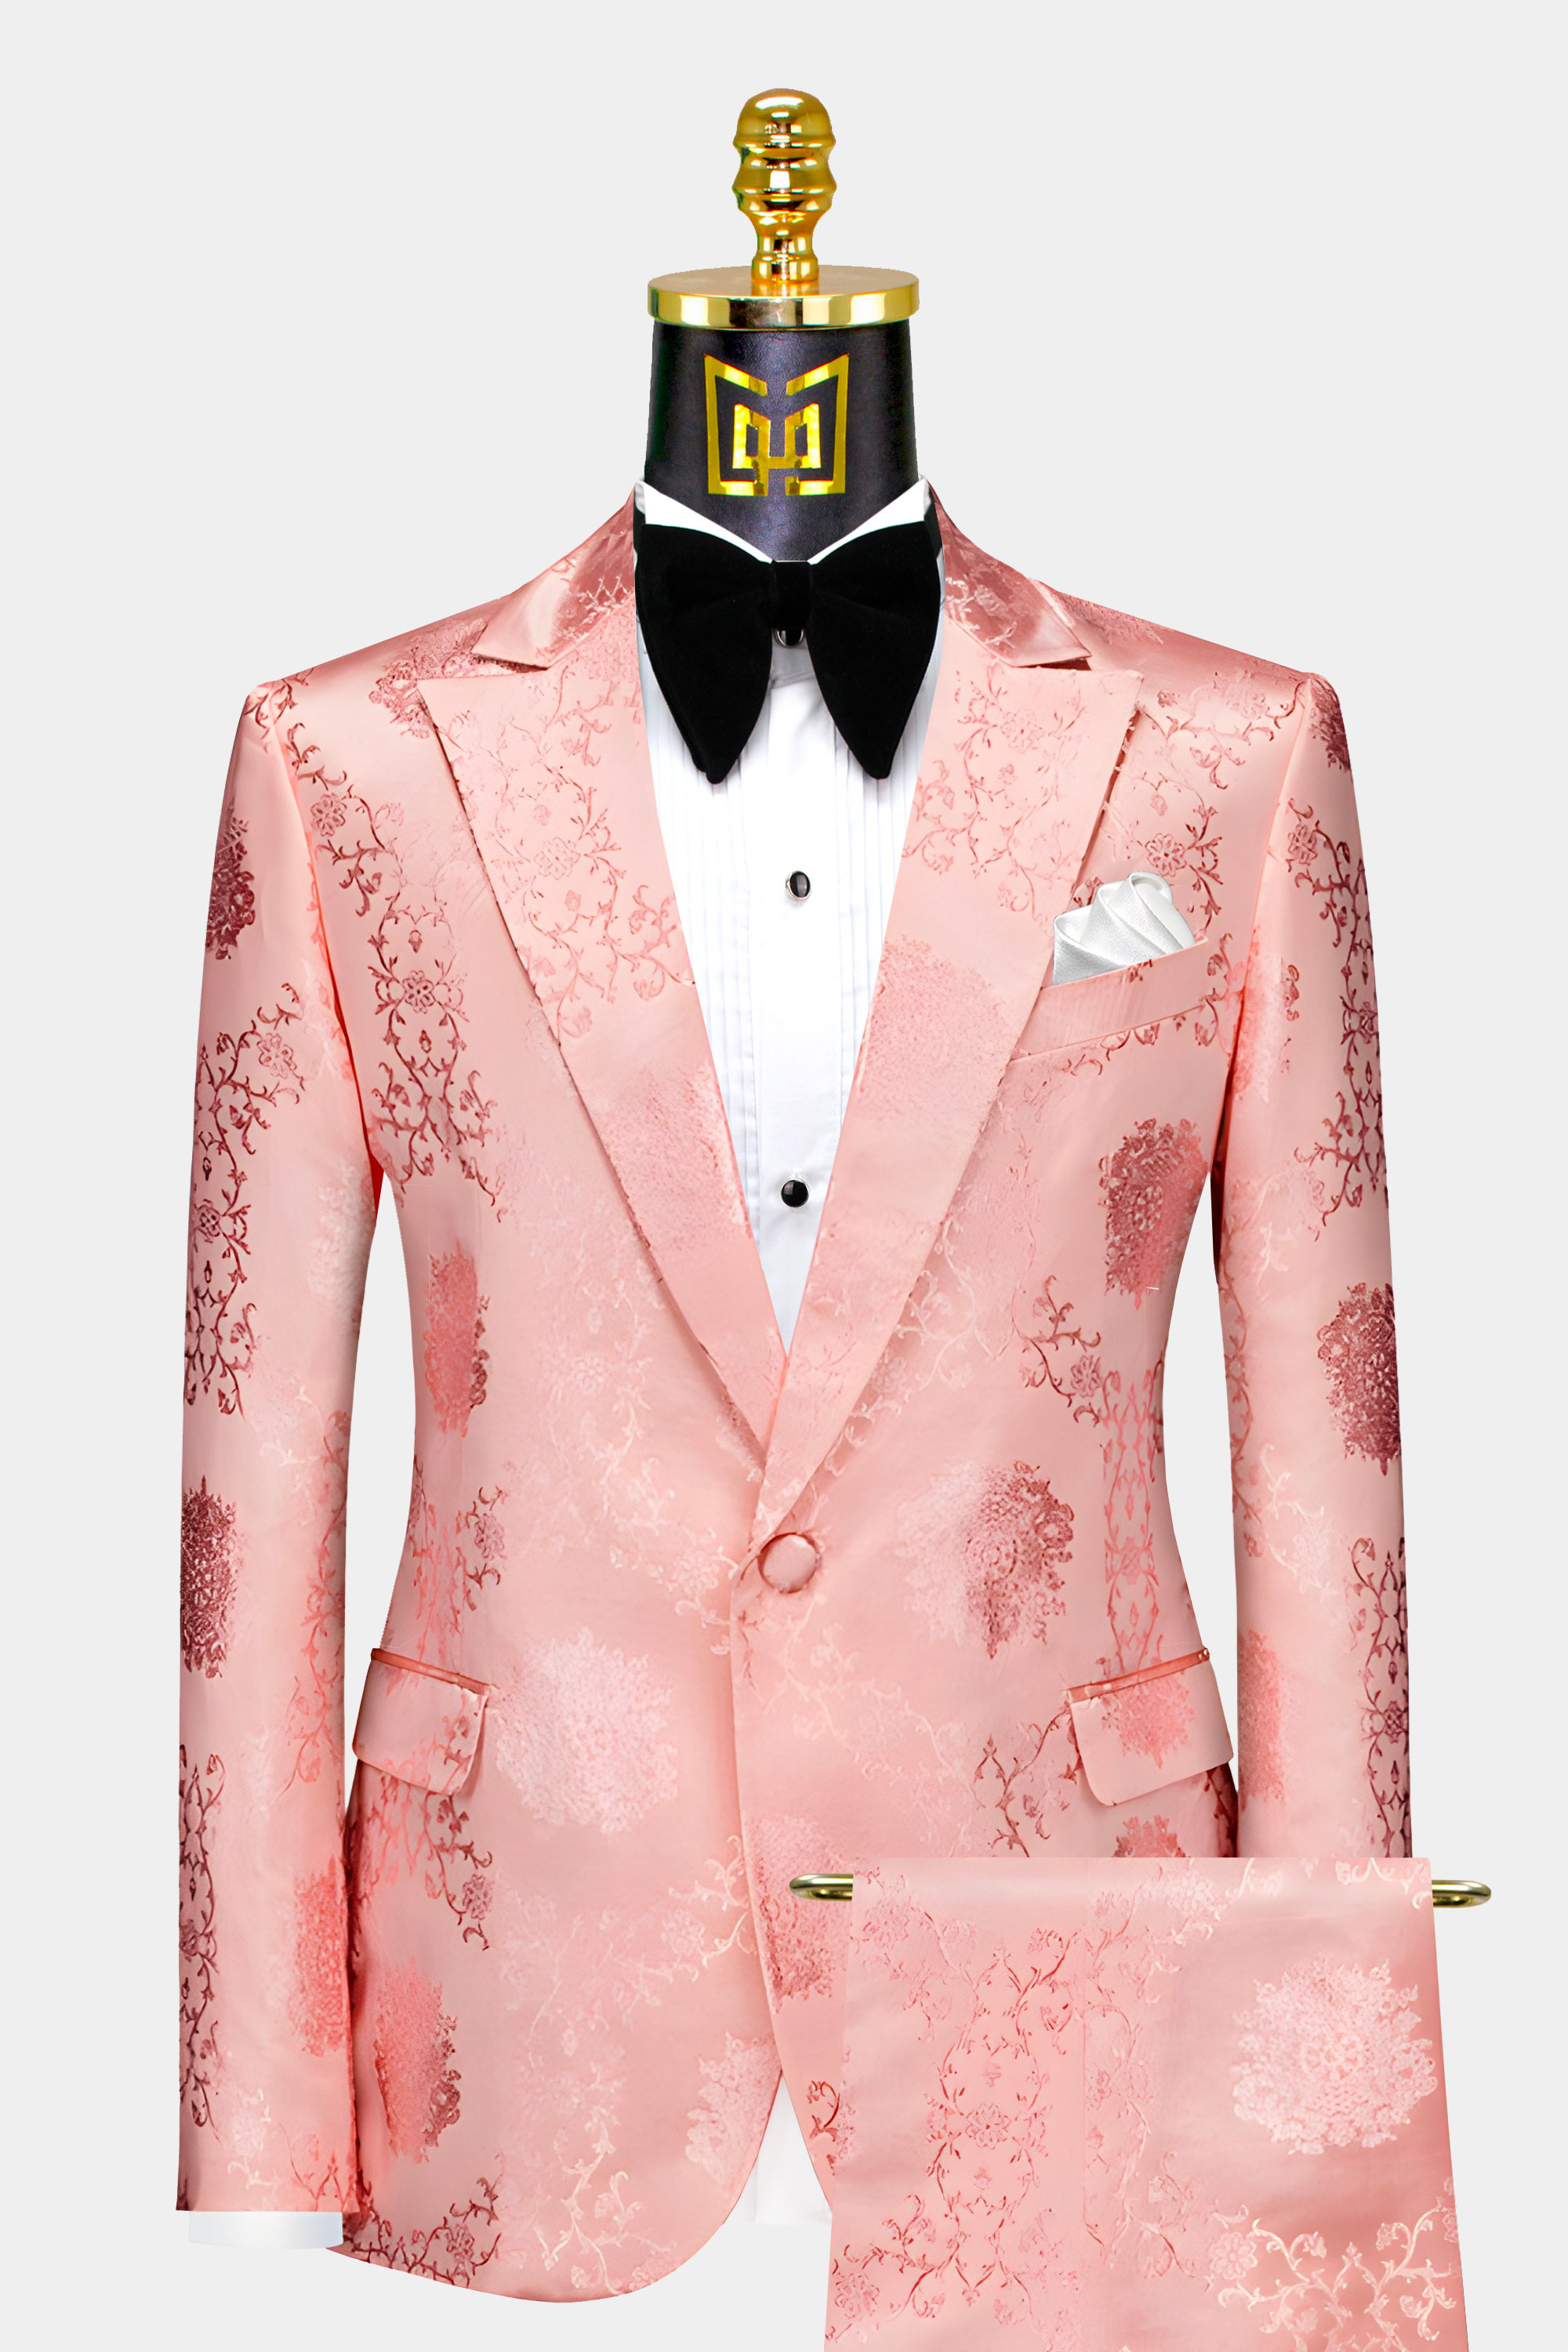 Mens-Rose-Gold-Floral-Suit-Wedding-Groom-Prom-Suit-from-Gentlemansguru.com